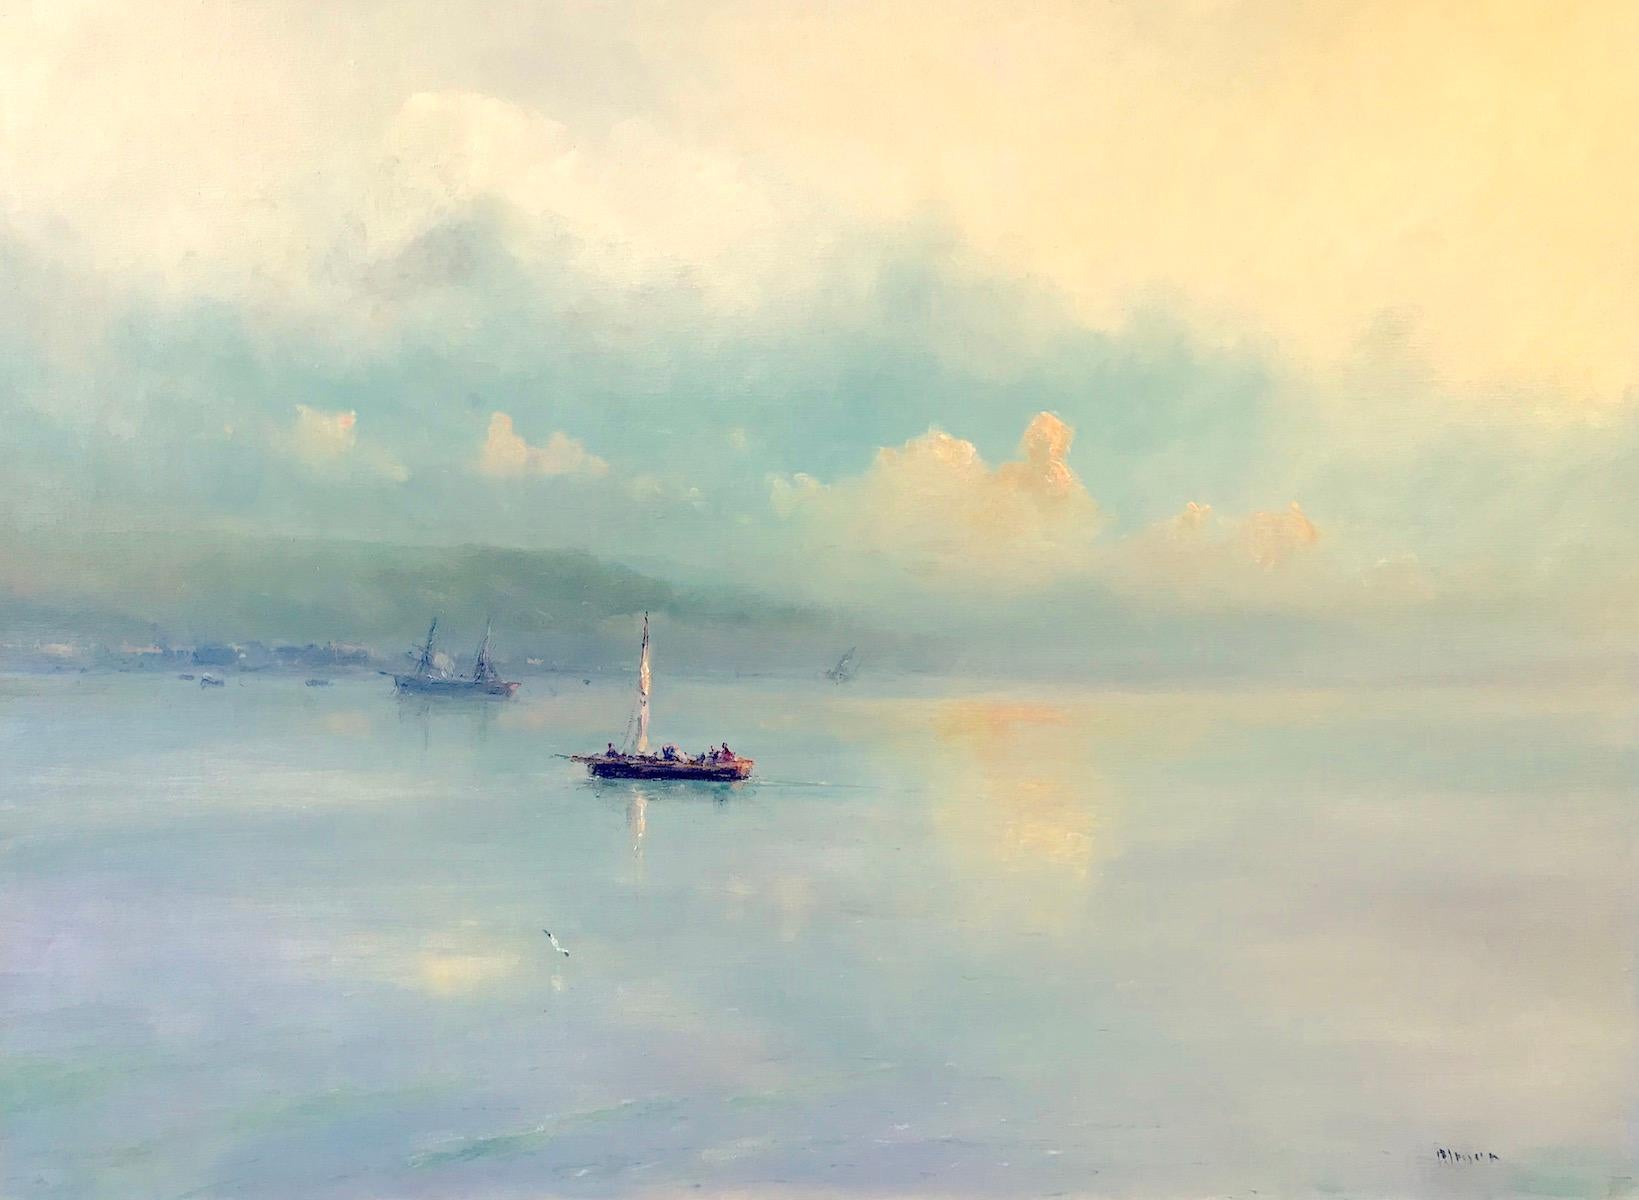 Karen Darbinyan Landscape Painting - Clouds Reflection, Seascape oil painting, one of a kind, framed